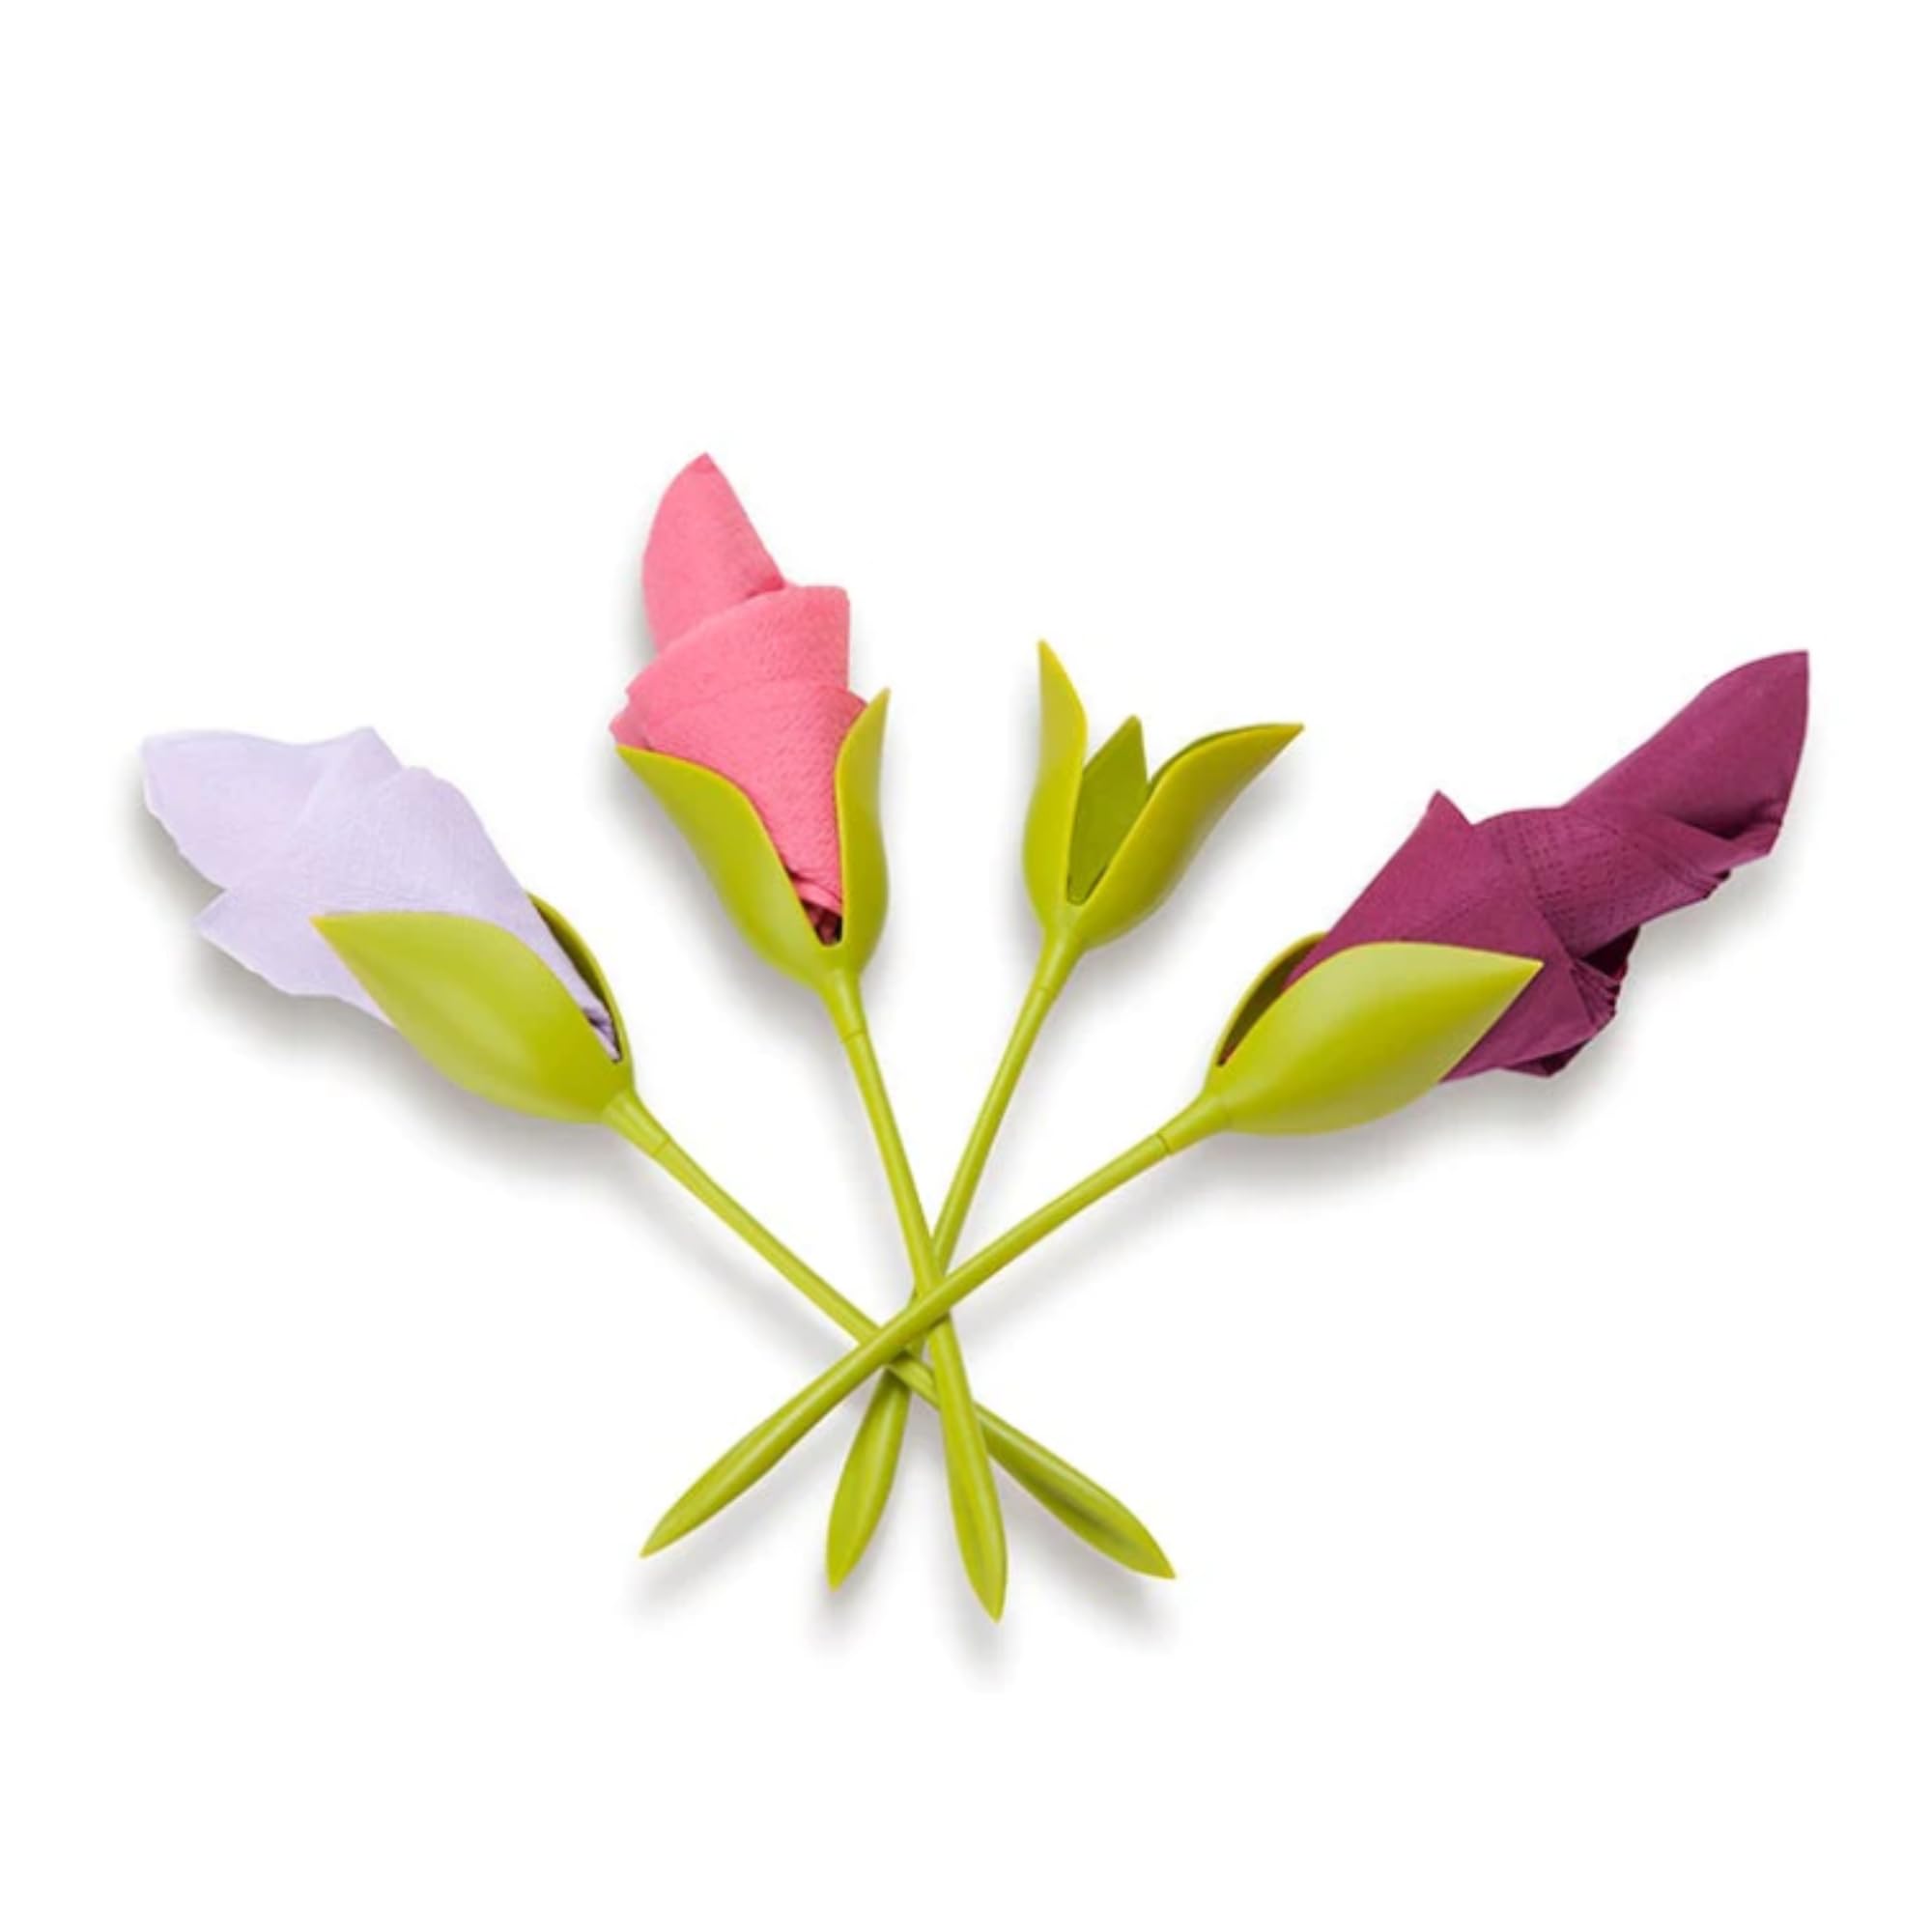 Peleg Design Bloom Napkin Holders for Tables, Set of 4 Green Stemmed Plastic Twist Flower Buds Serviette Holders Plus White Napkins for Making Original Table Arrangements